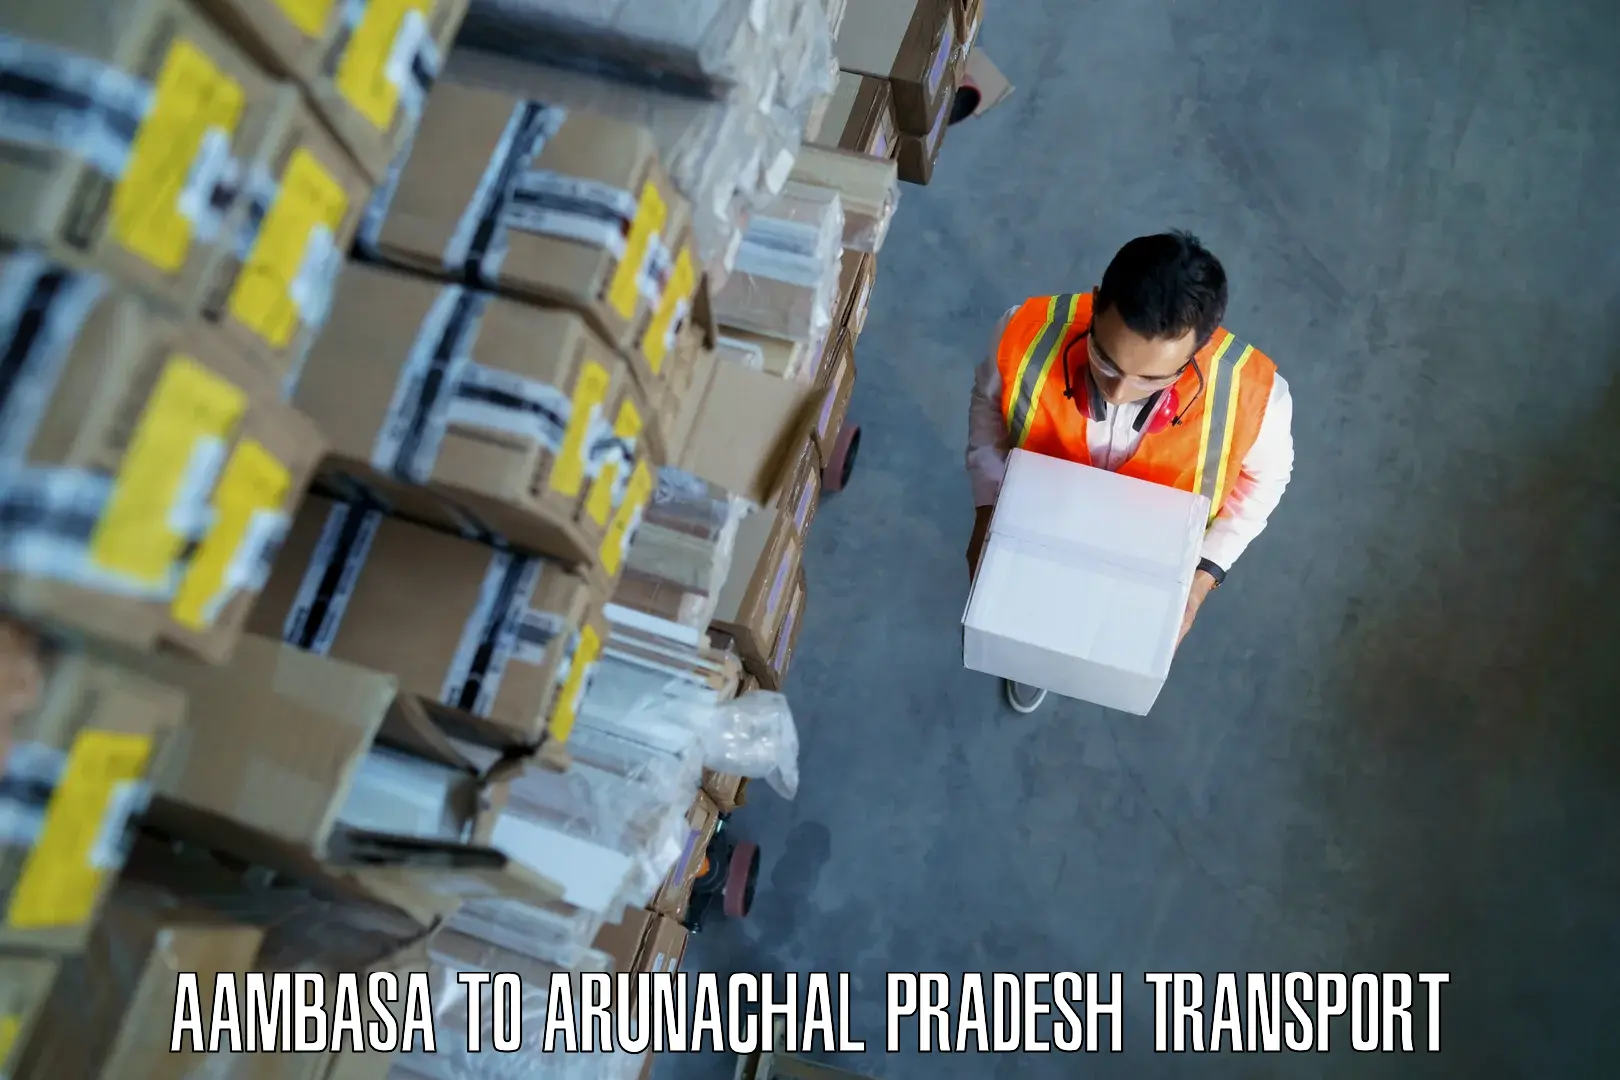 Furniture transport service Aambasa to Tirap